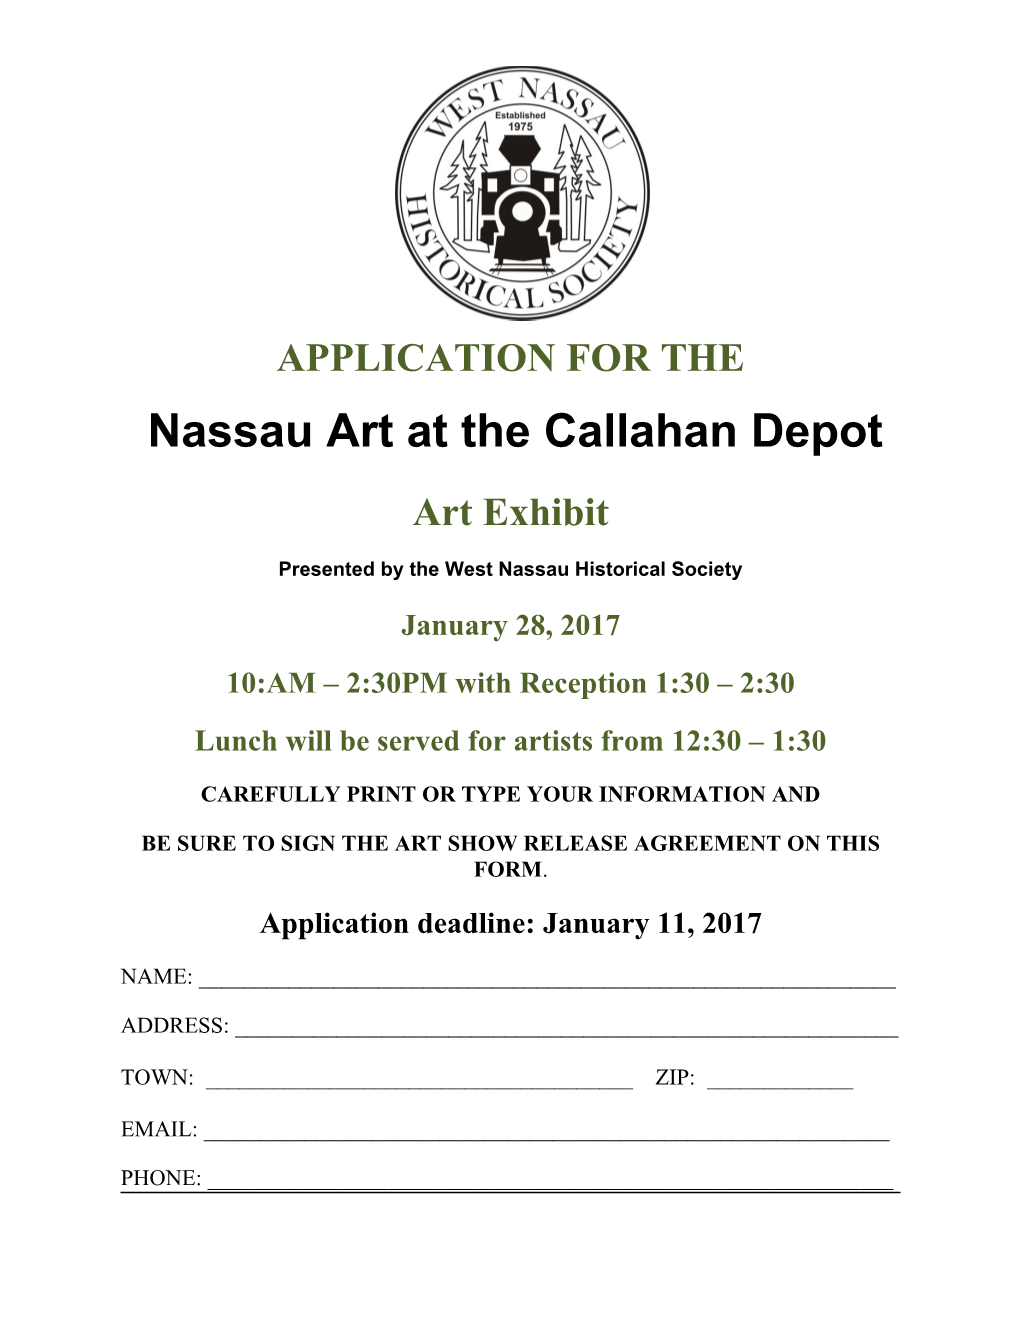 Nassau Art at the Callahan Depot Application Page 4